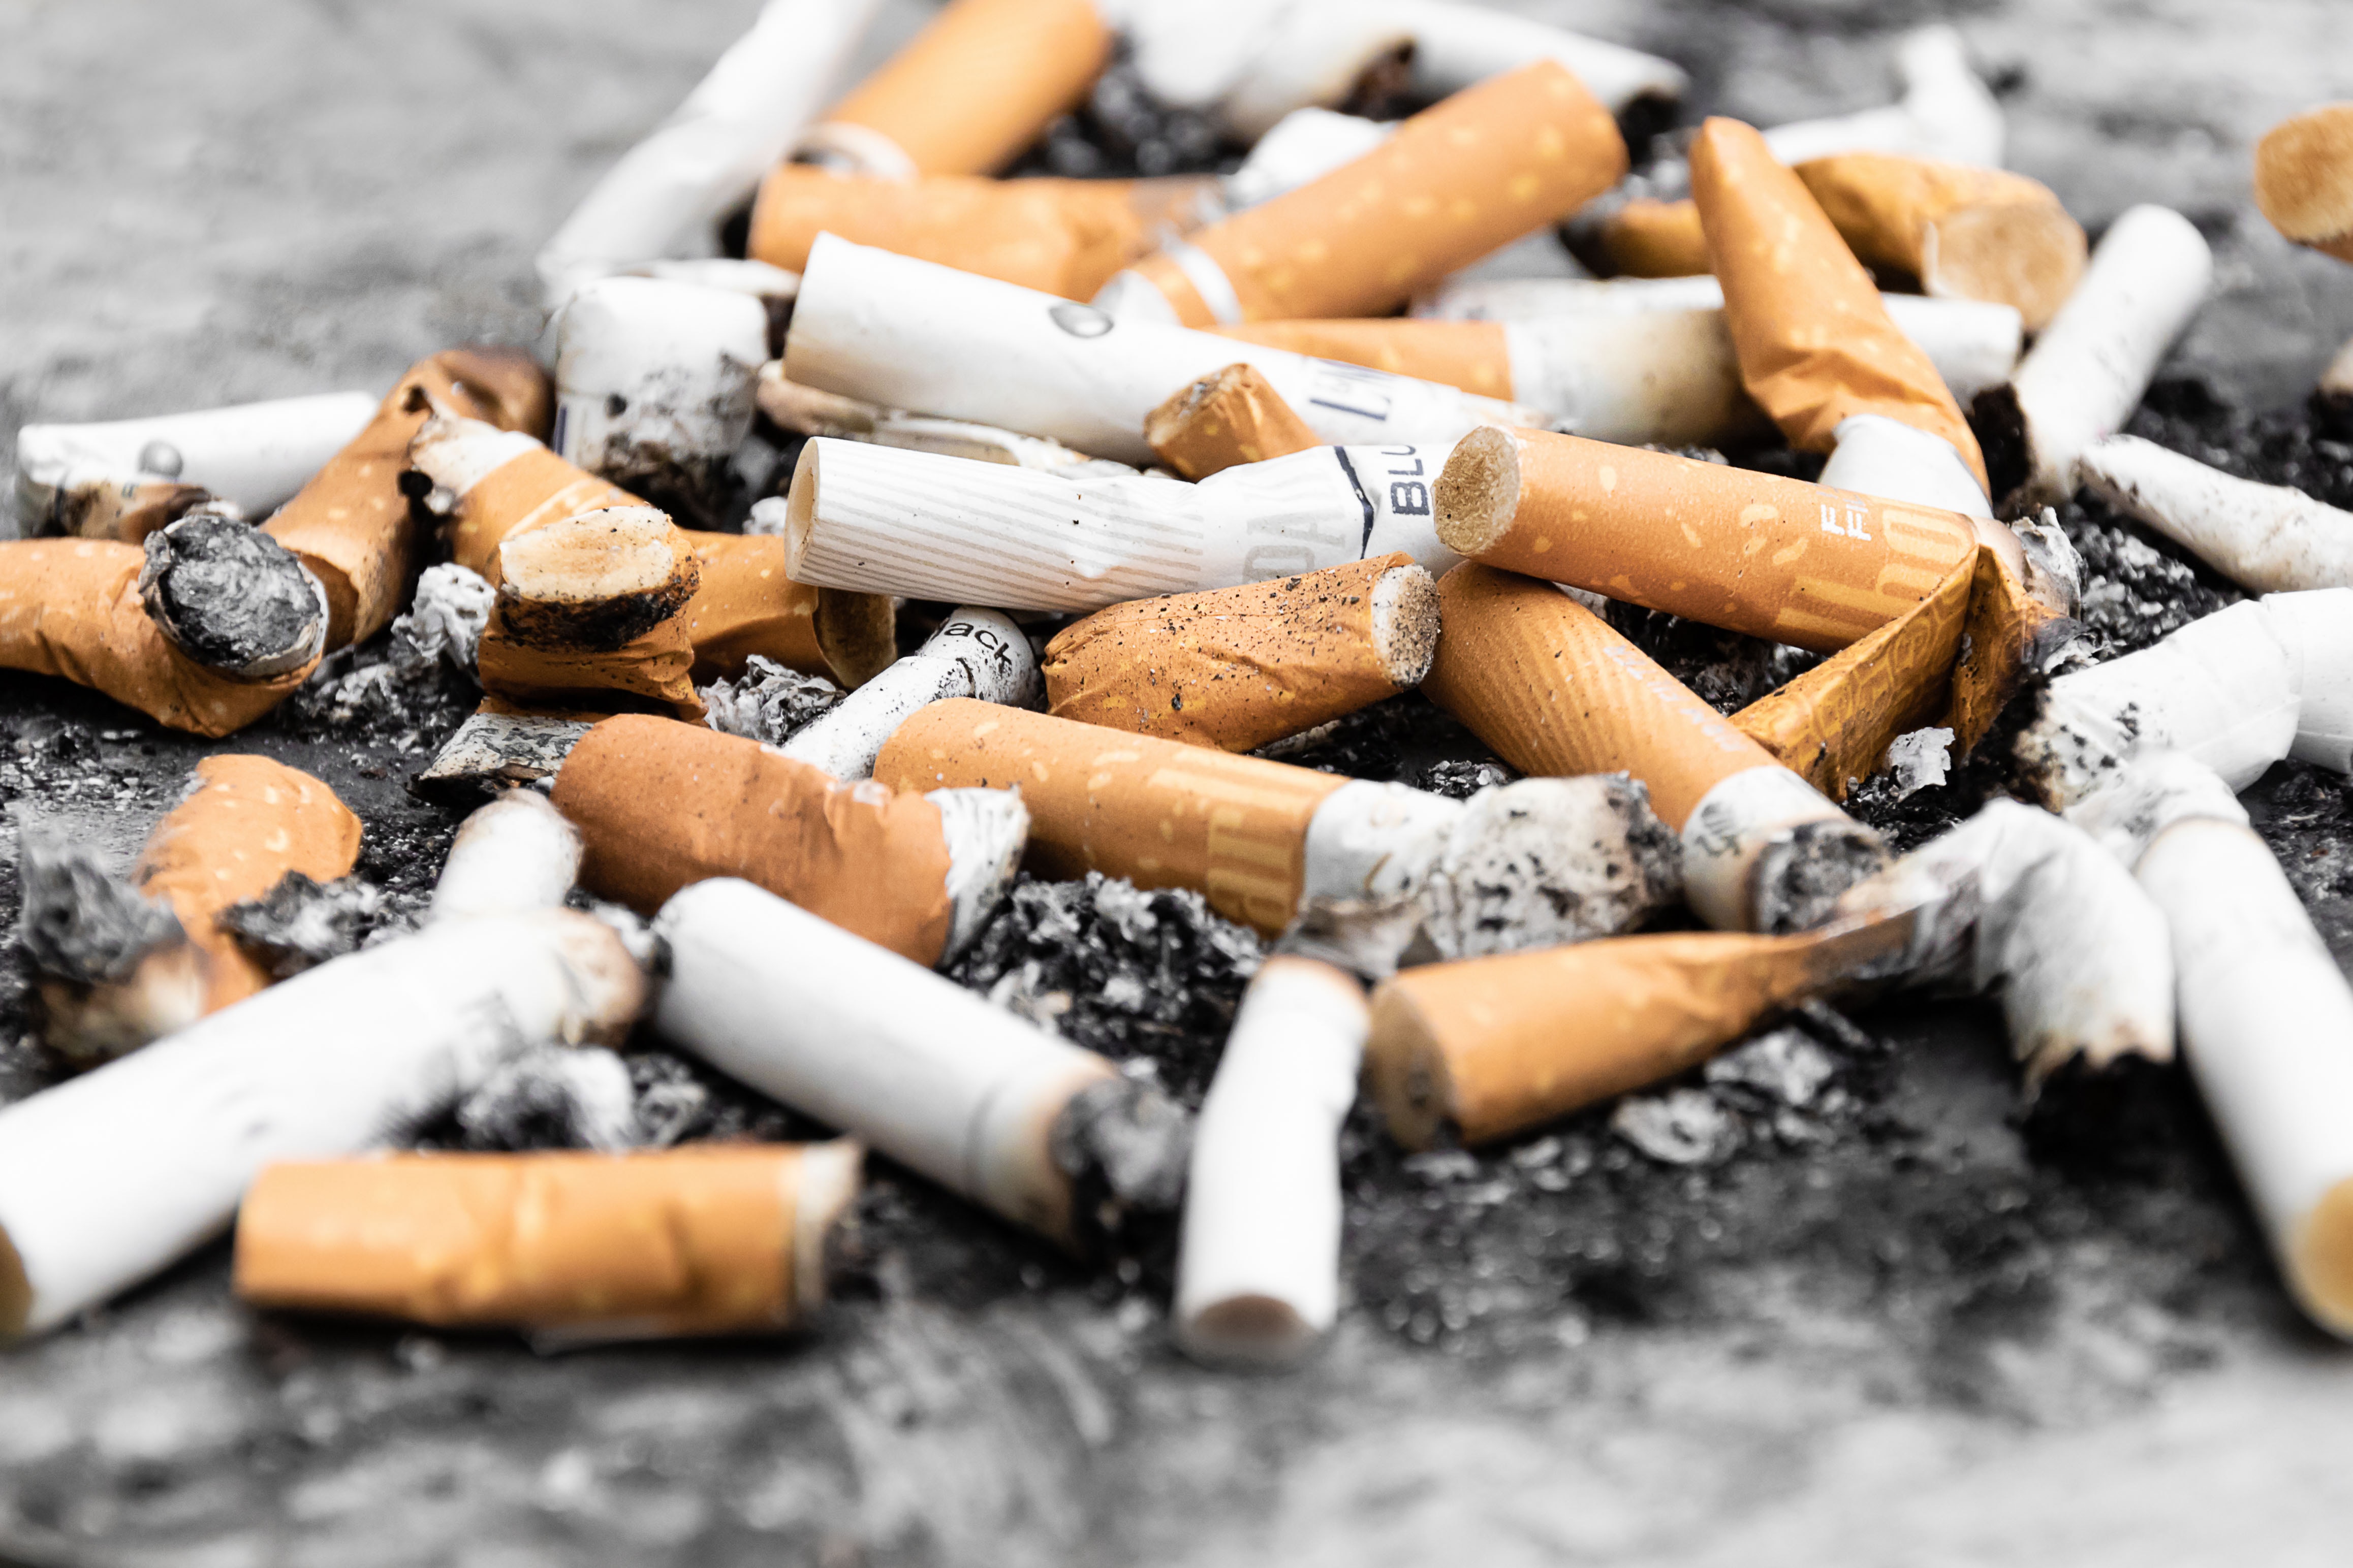 a pile of cigarette ends